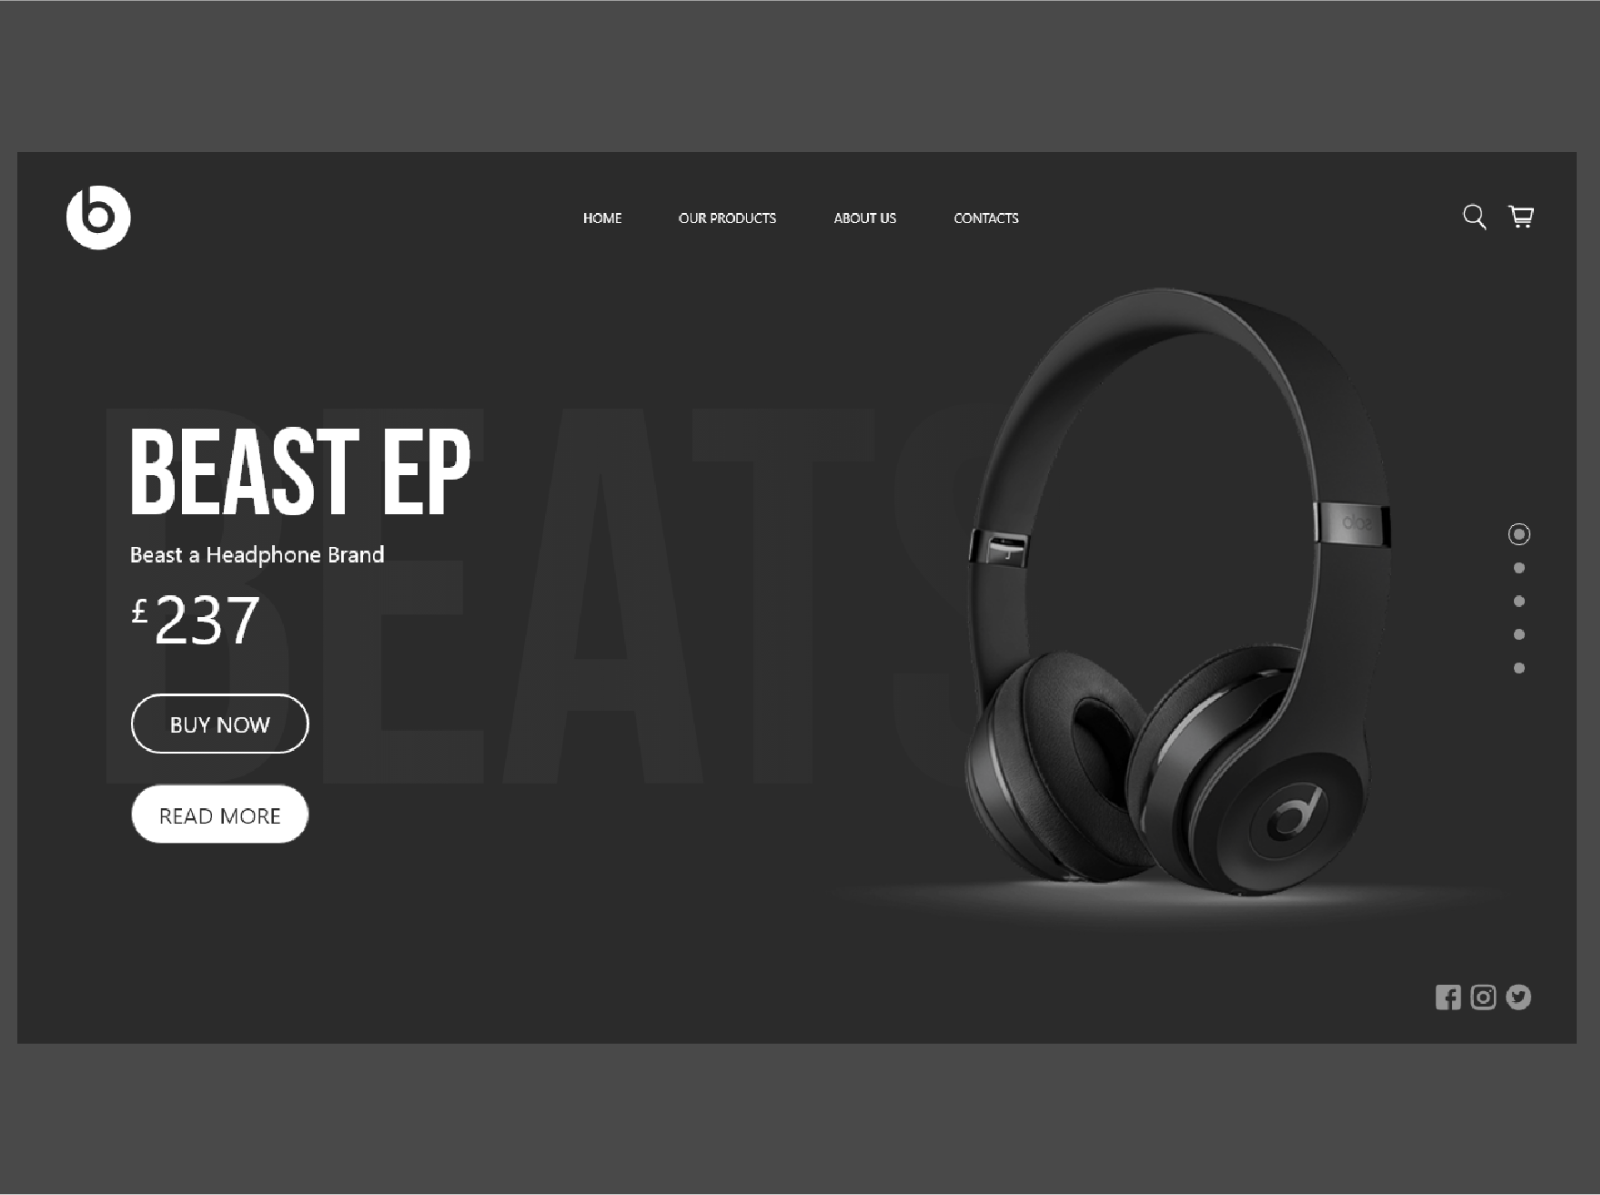 Beats headphones promotion web UI 